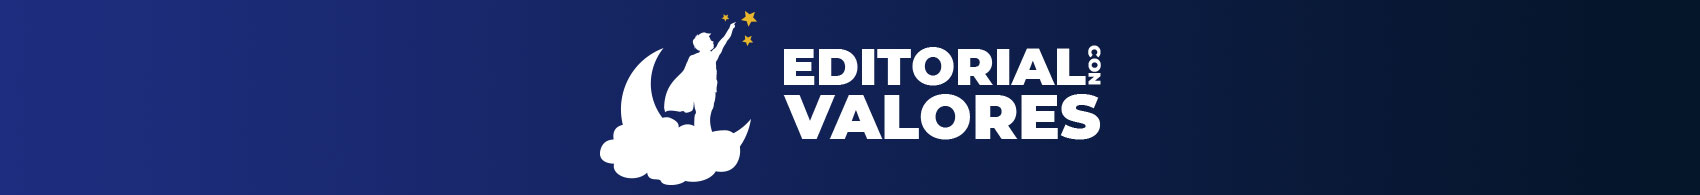 Editorial con valores